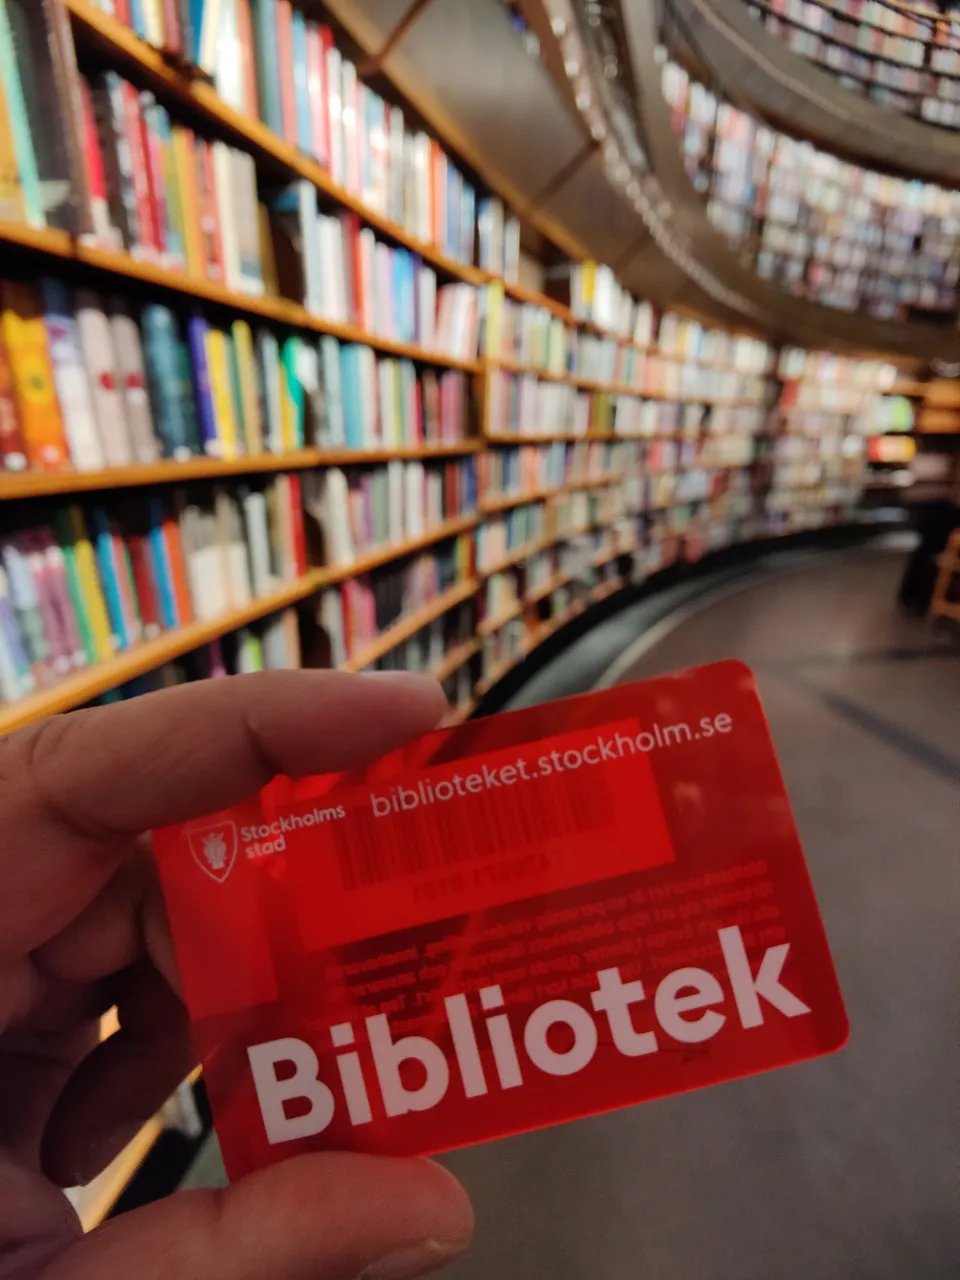 Biblioteket Stockholm (Library Membership Card)